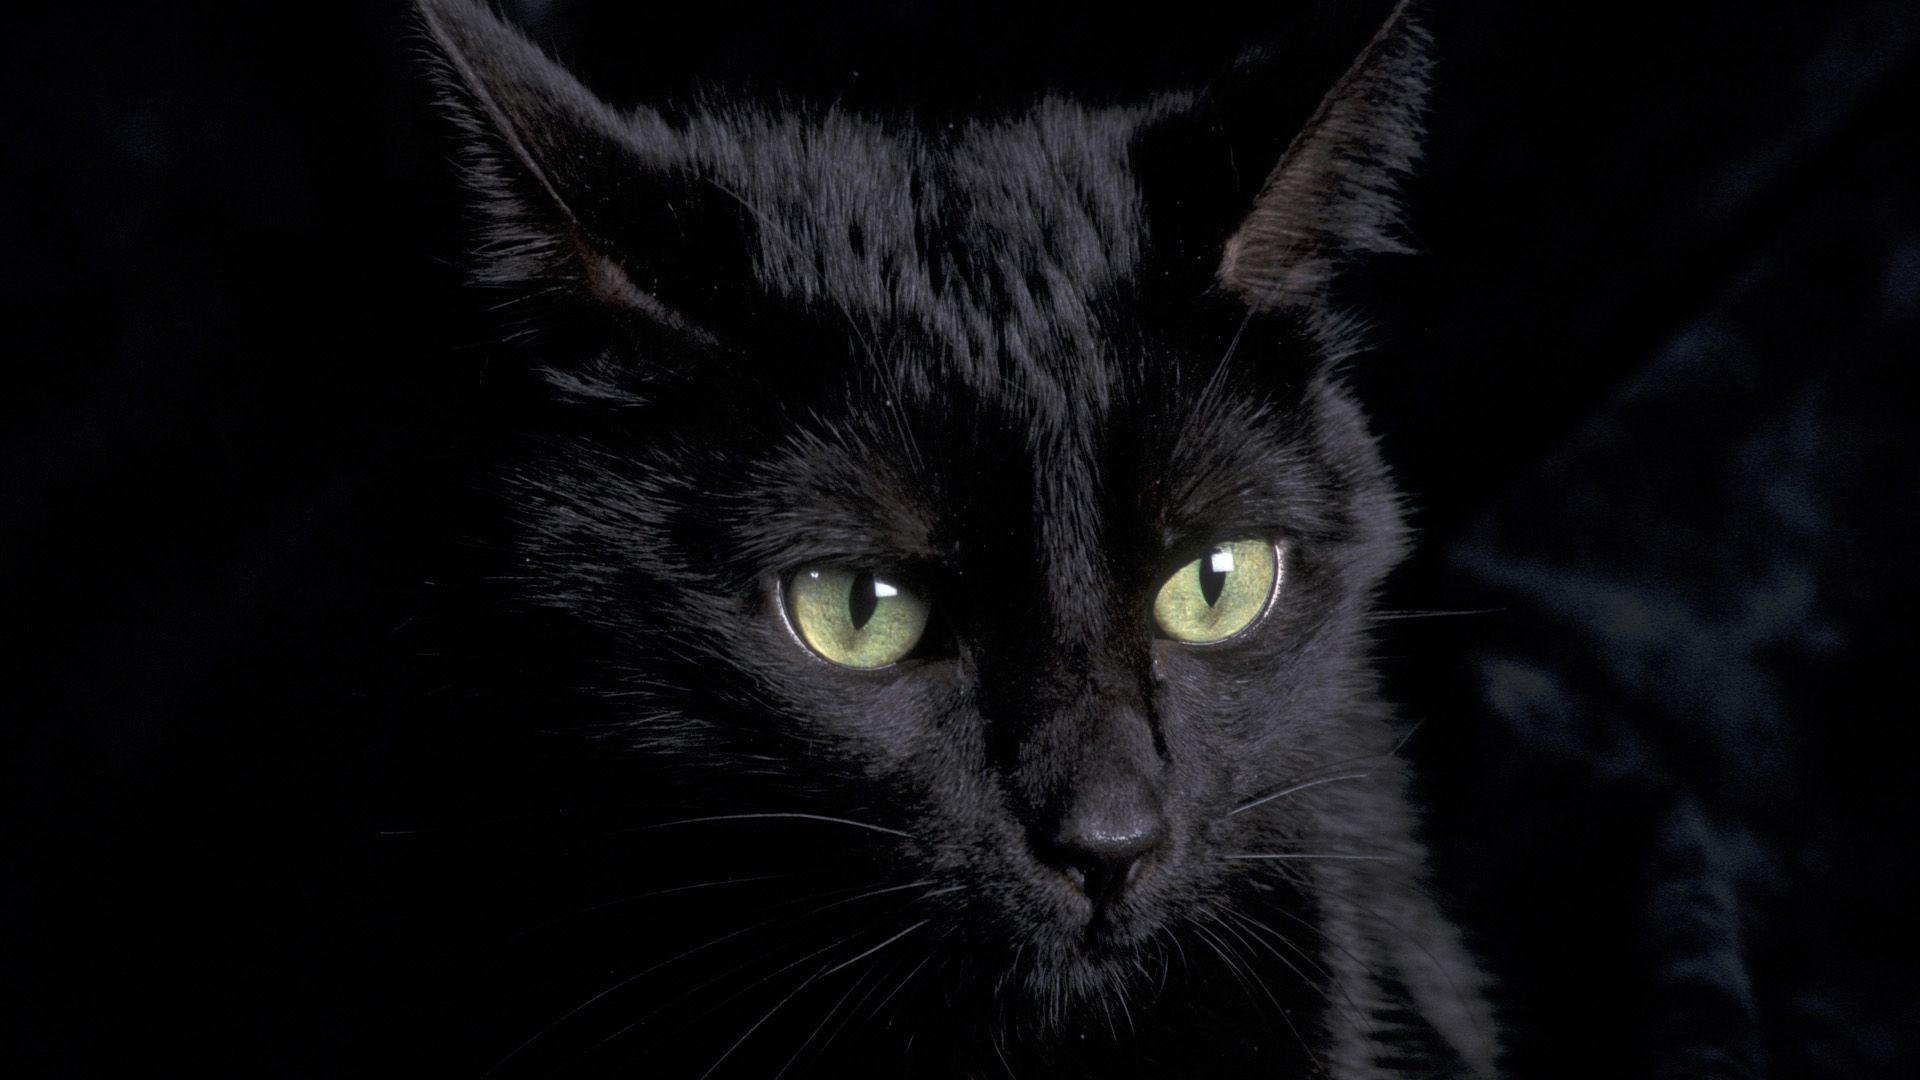 28+] Black Cat with Green Eyes Wallpapers - WallpaperSafari